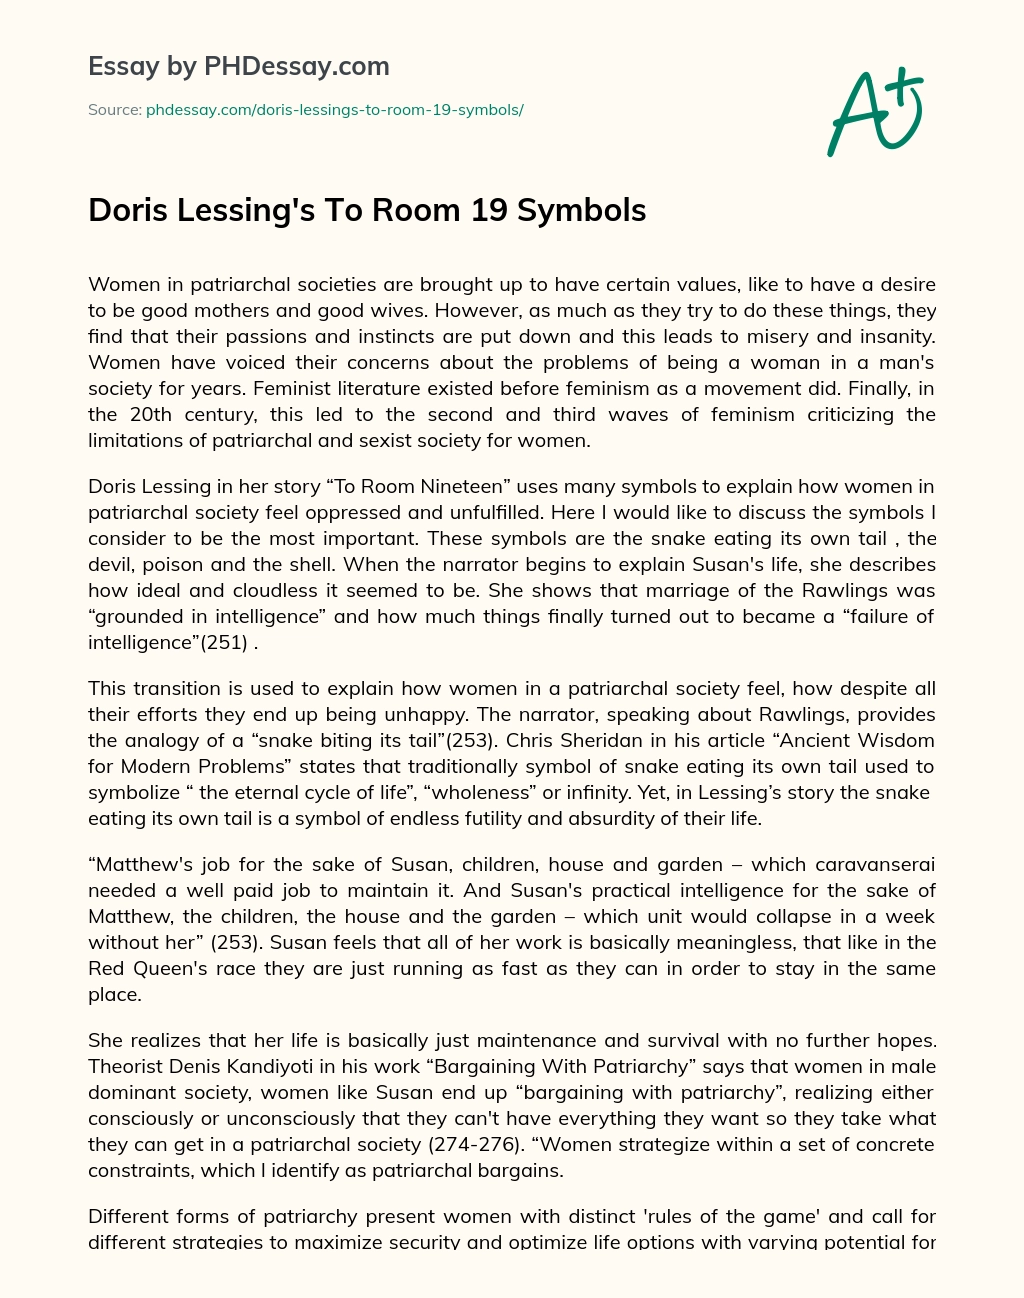 Doris Lessing’s To Room 19 Symbols essay